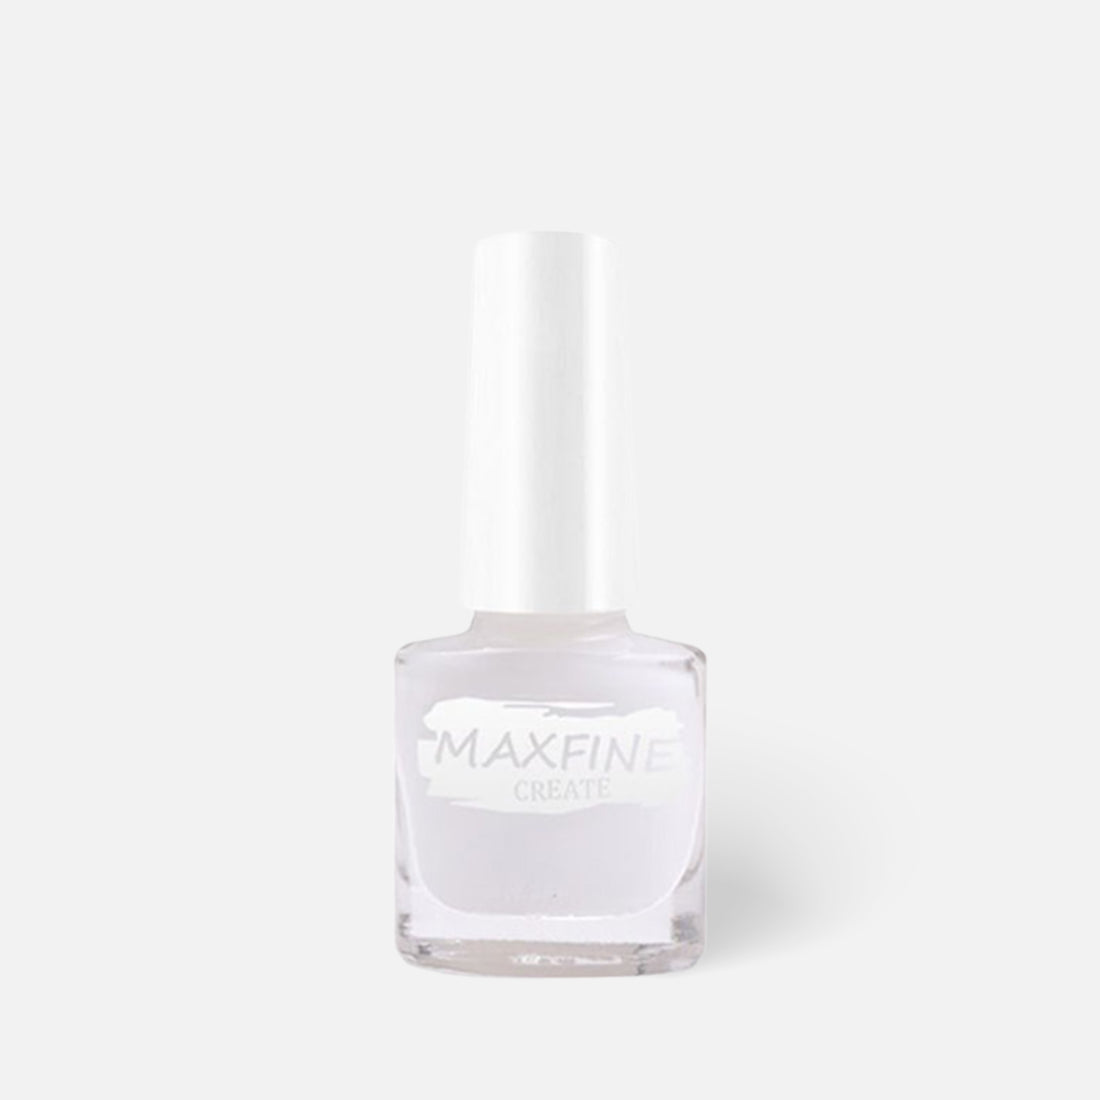 Maxfine Create Nail Polish Matte Top Coat